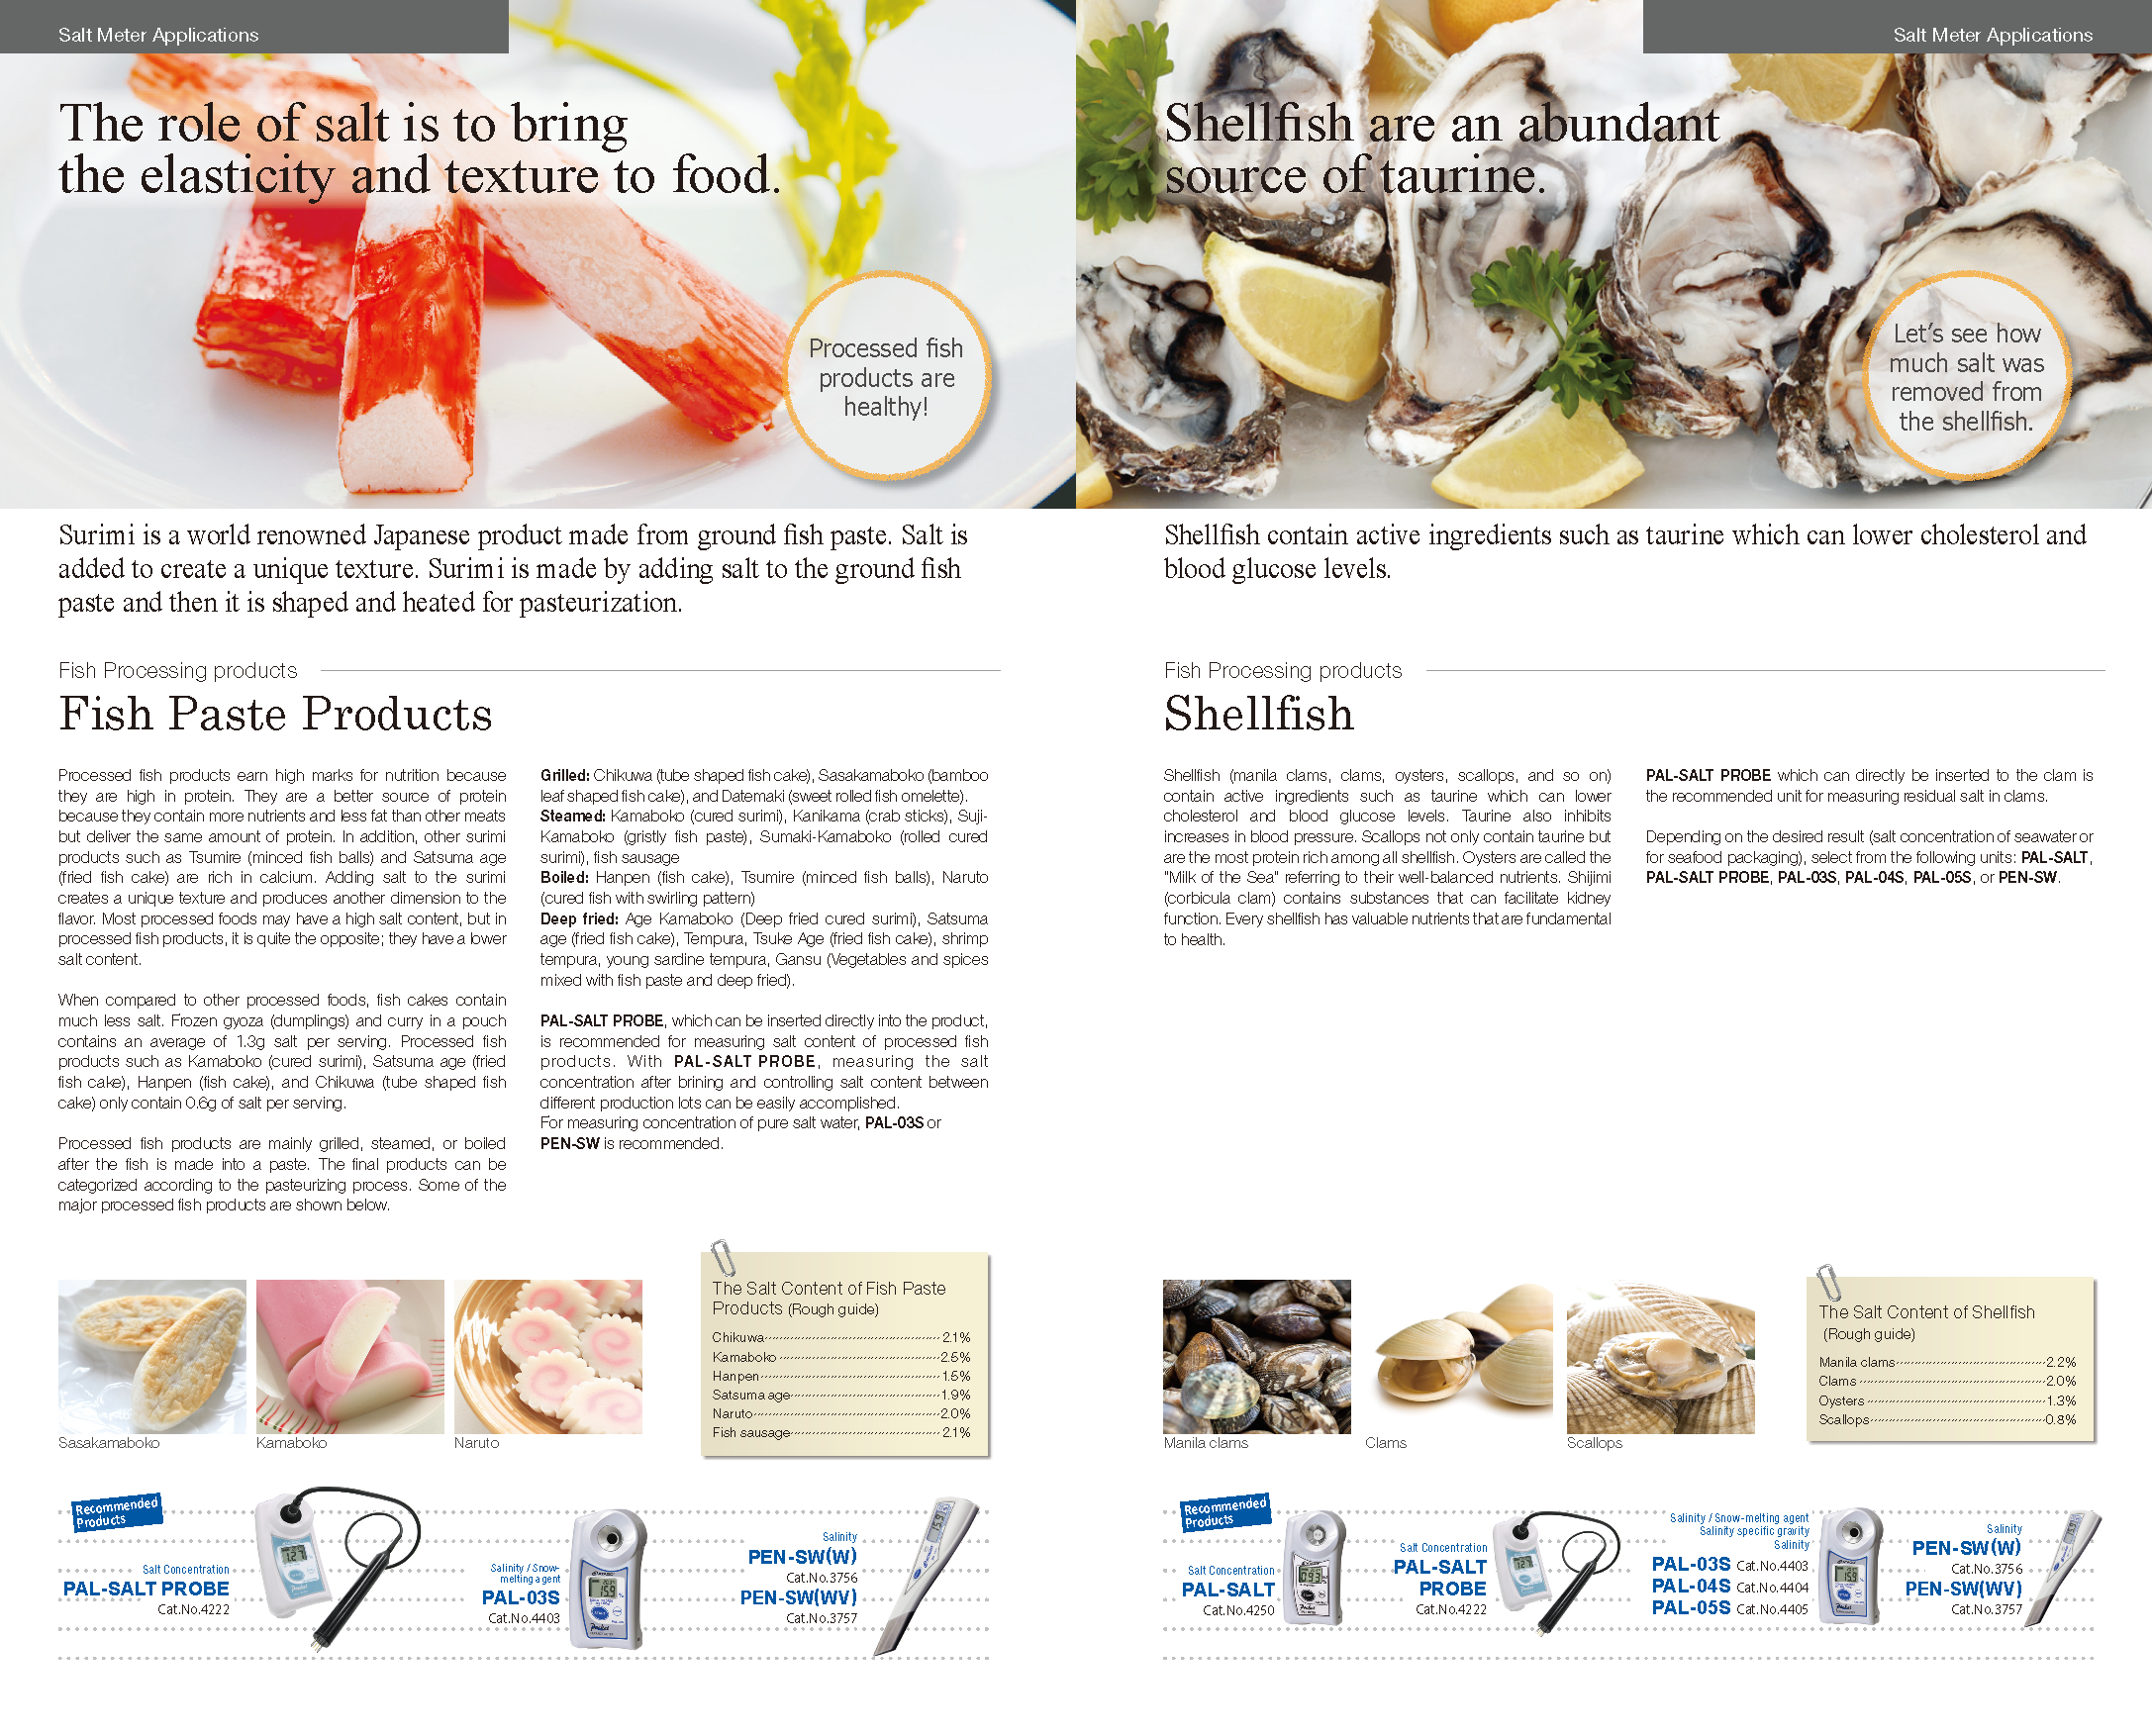 Fish Paste Products / Shellfish